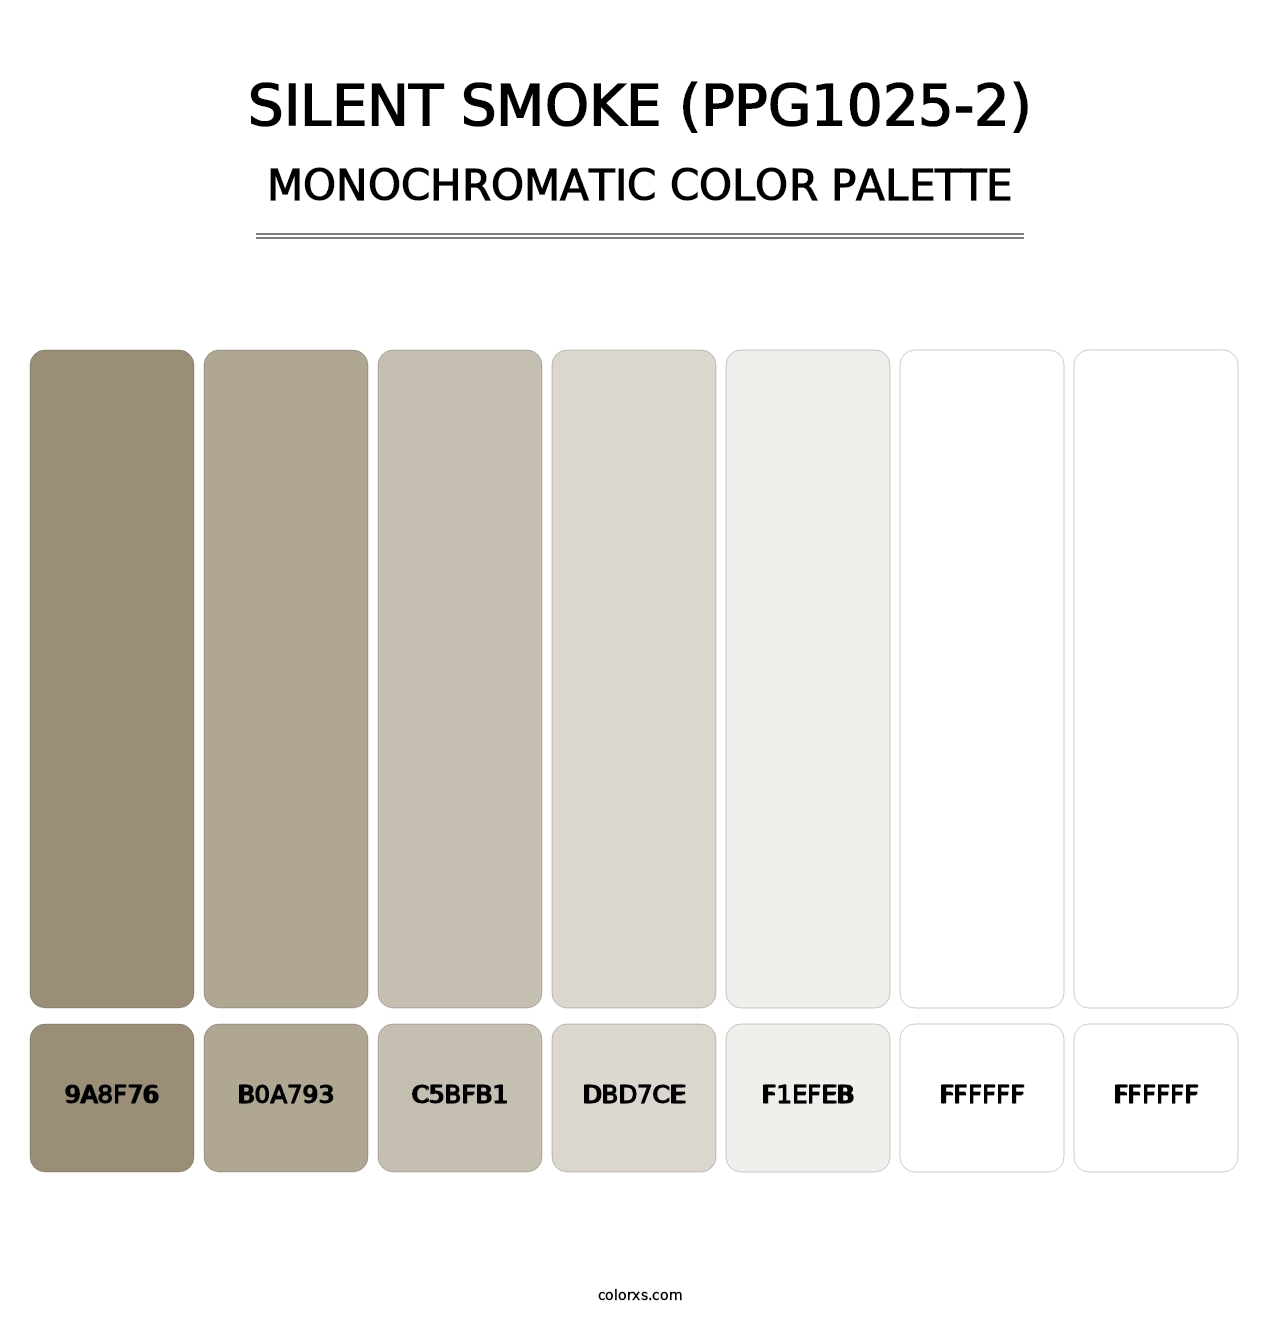 Silent Smoke (PPG1025-2) - Monochromatic Color Palette